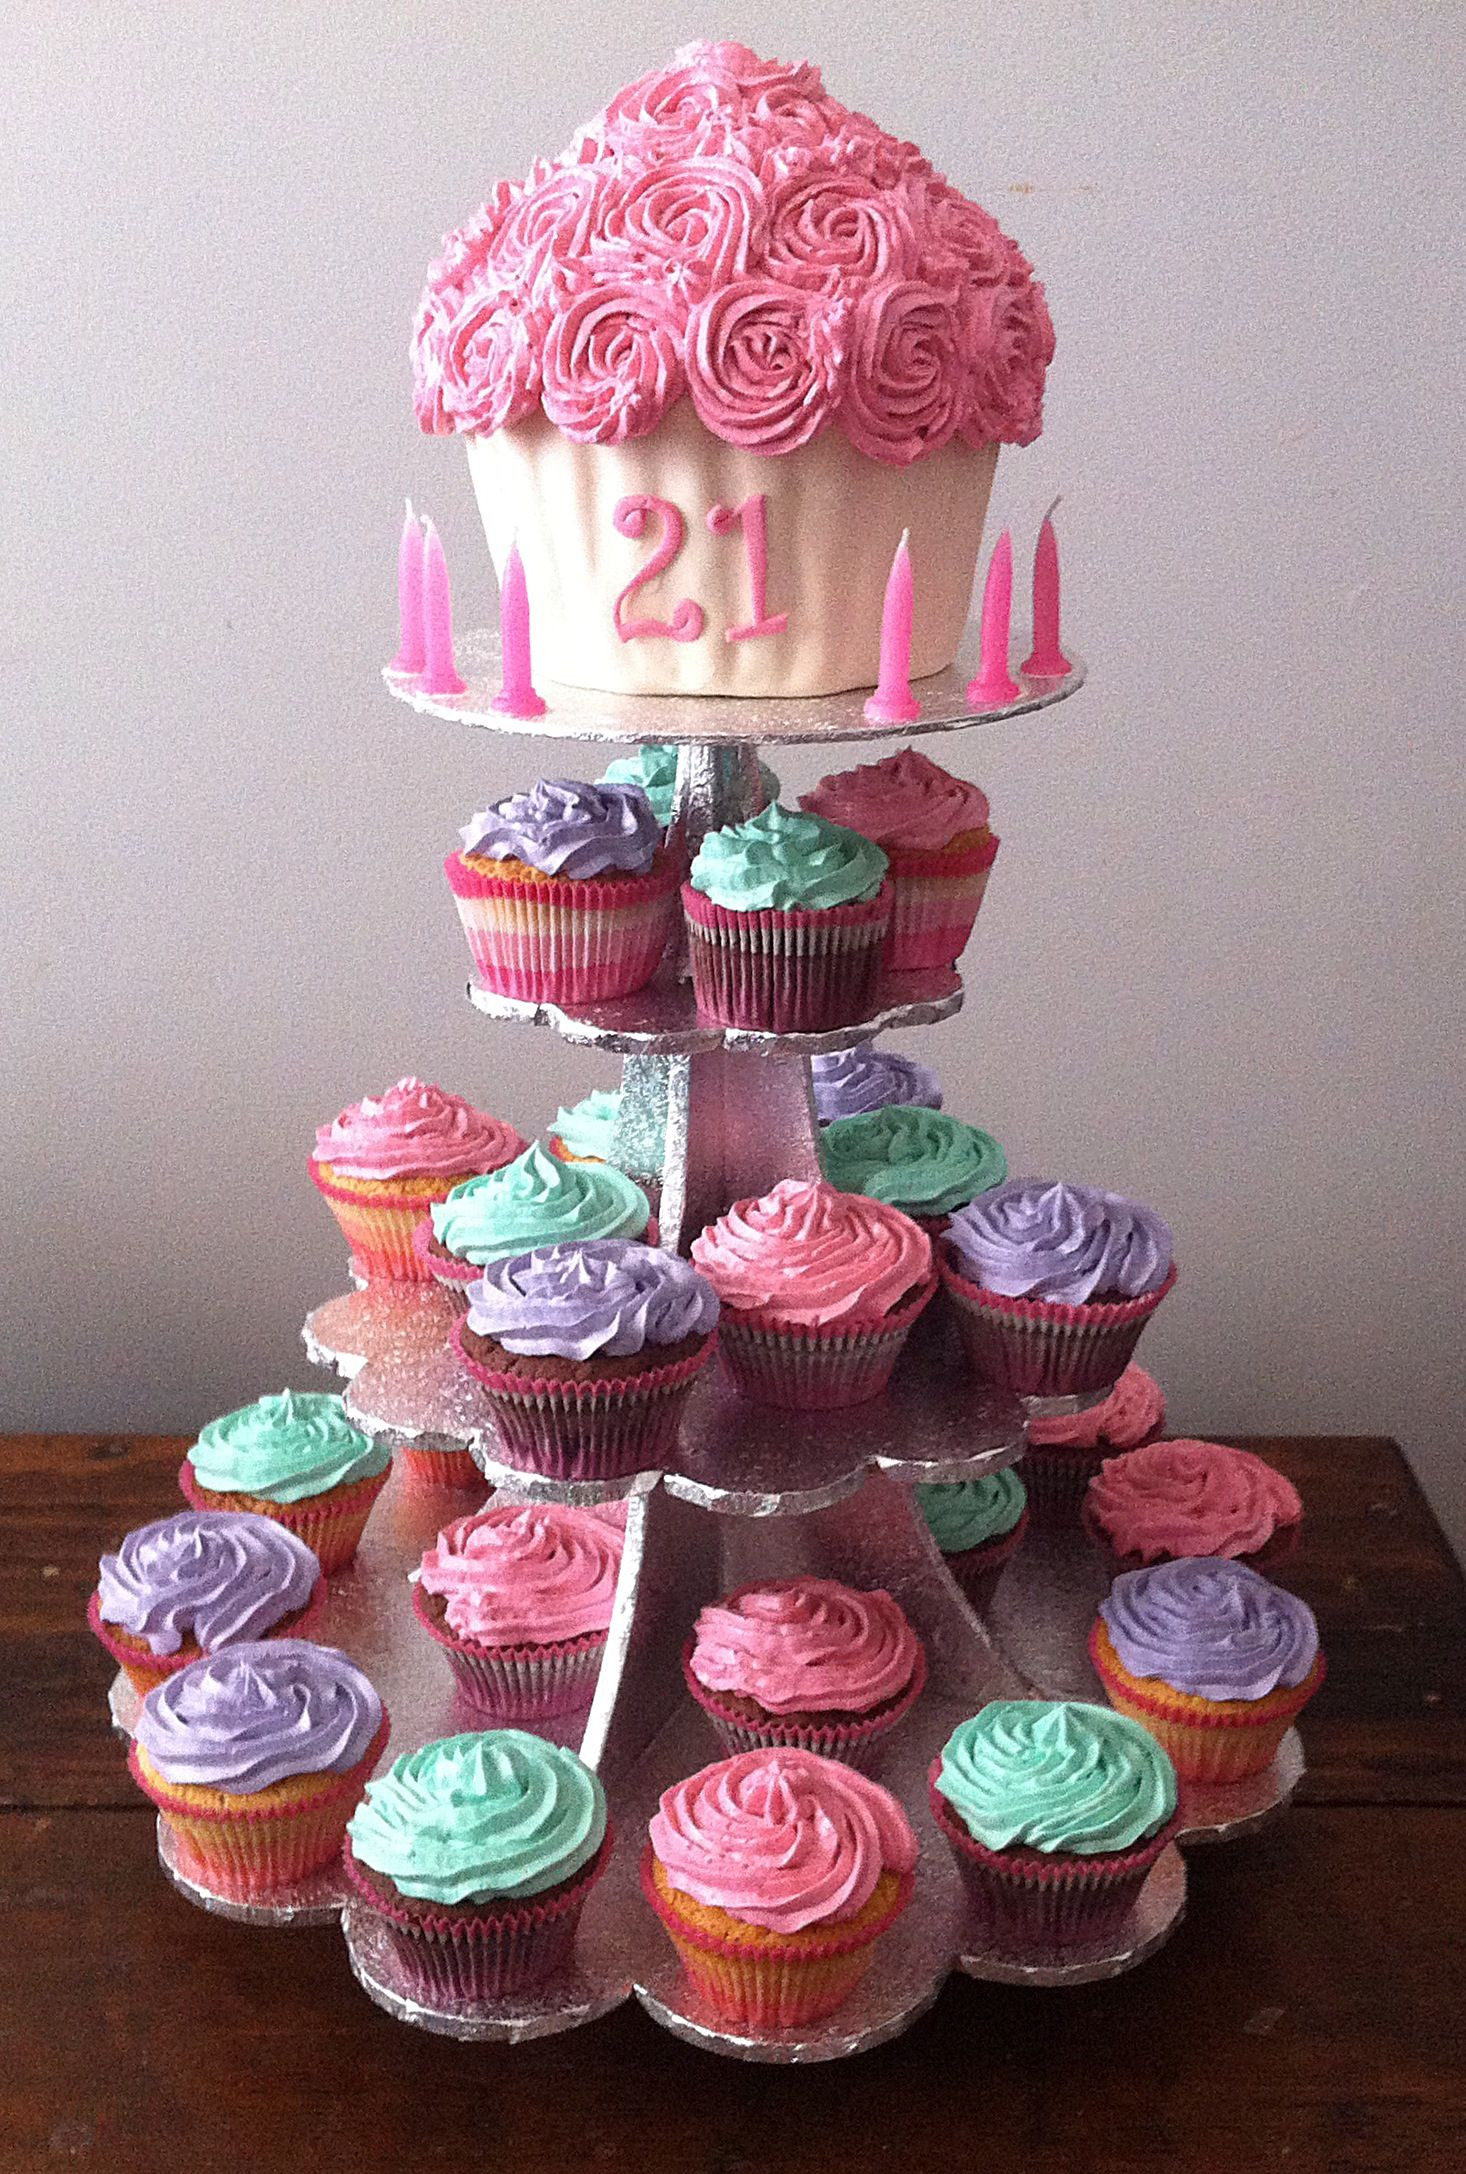 21St Birthday Cupcake Ideas
 21st birthday giant cupcake